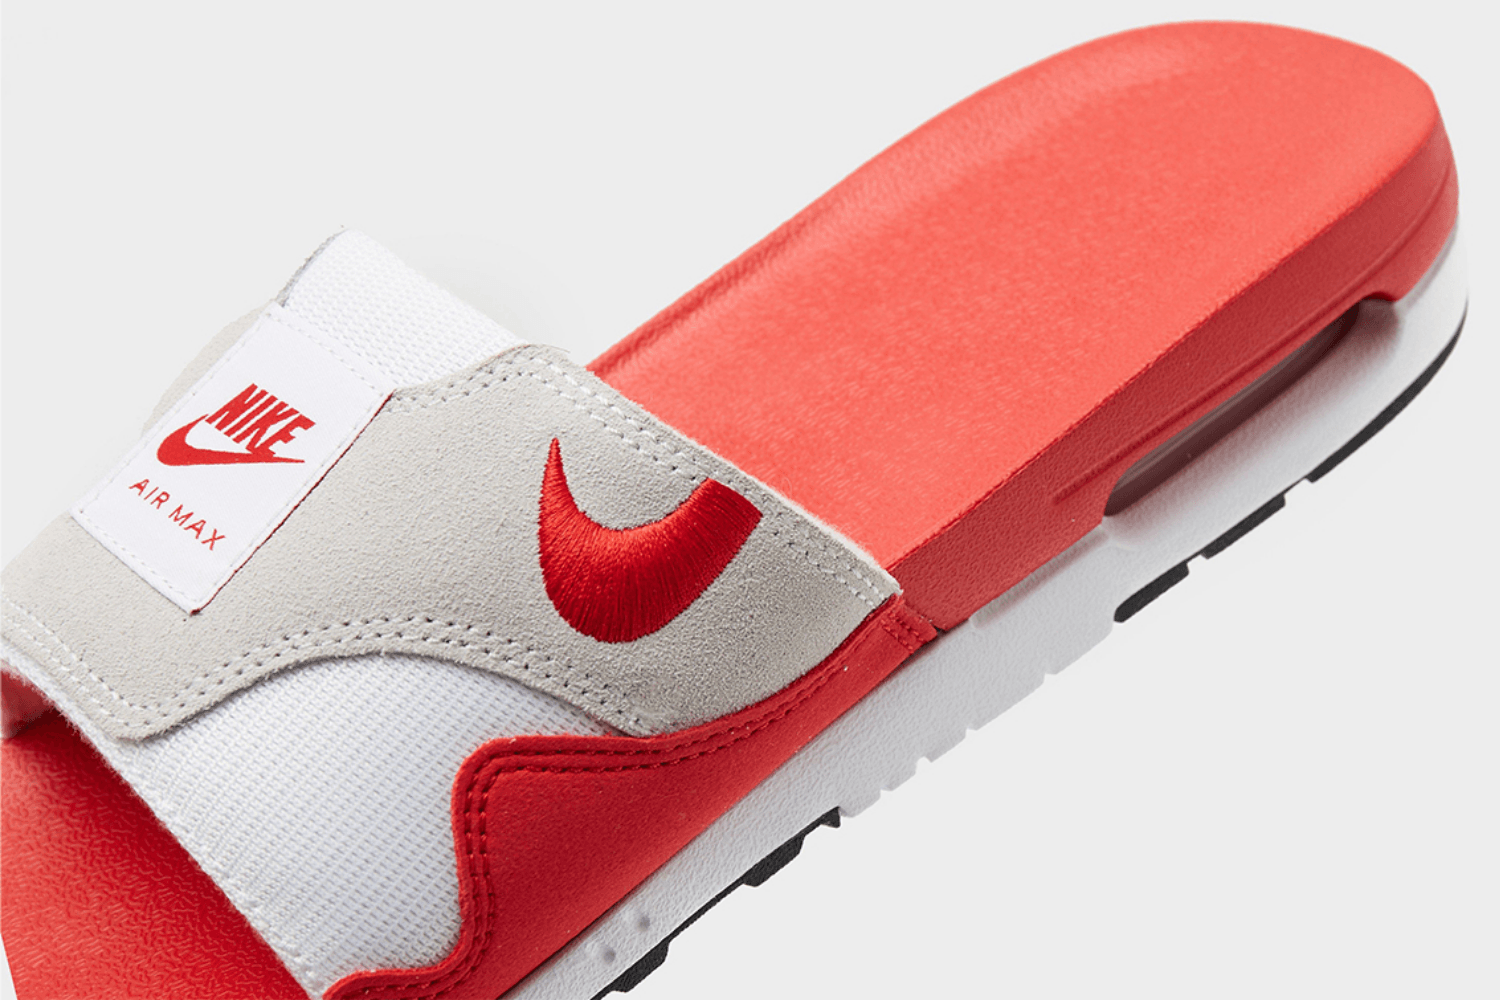 Nike introduceert de Air Max 1 Slide